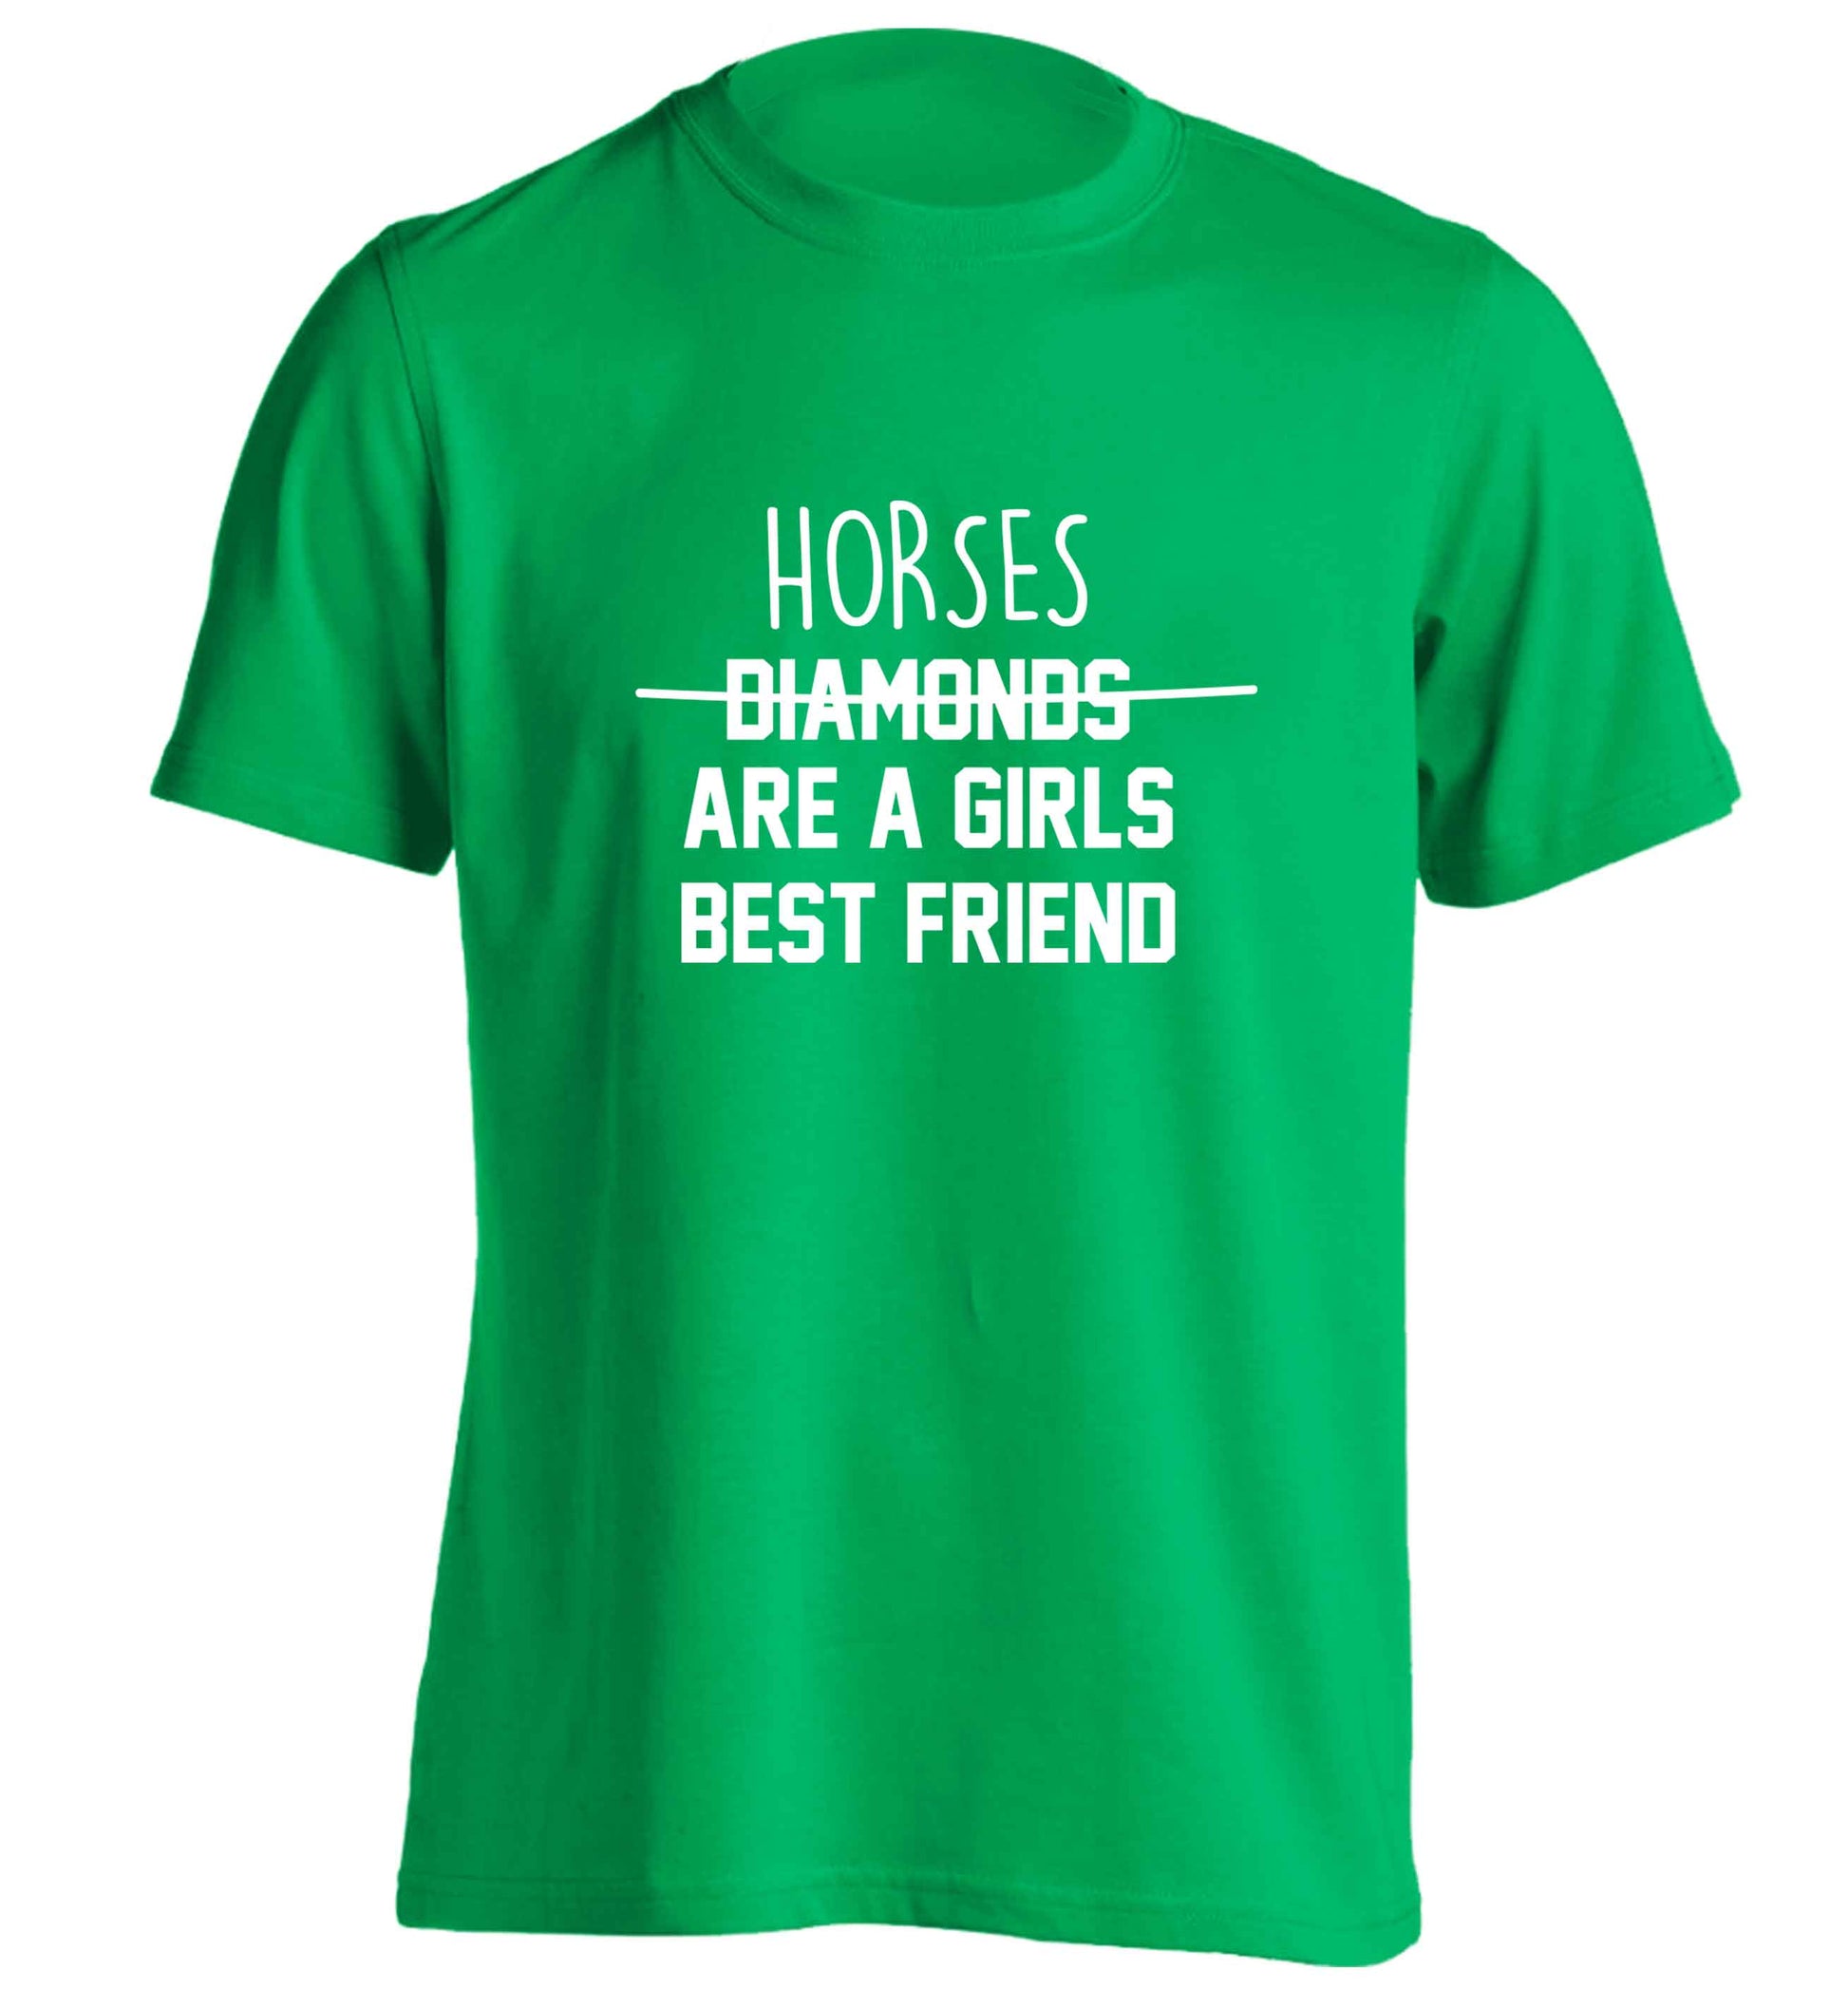 Horses are a girls best friend adults unisex green Tshirt 2XL